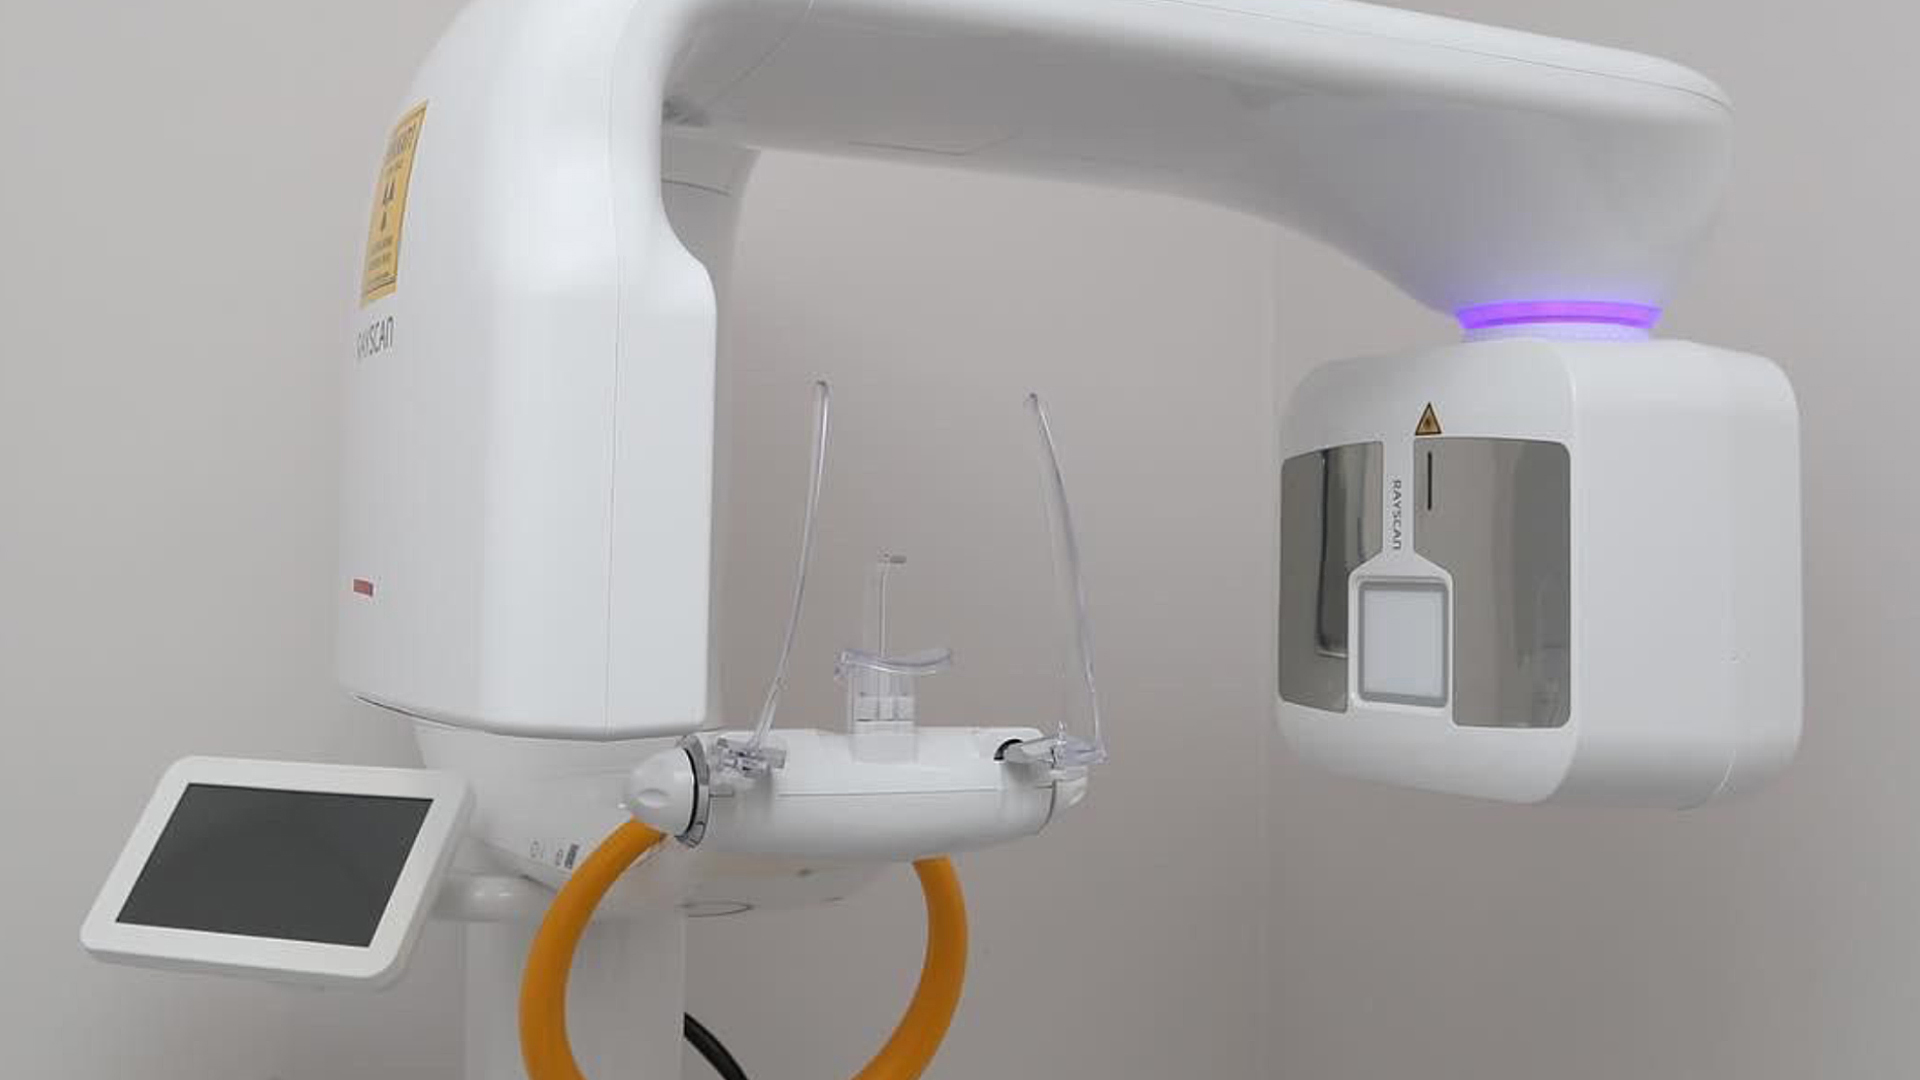 A dental scan machine